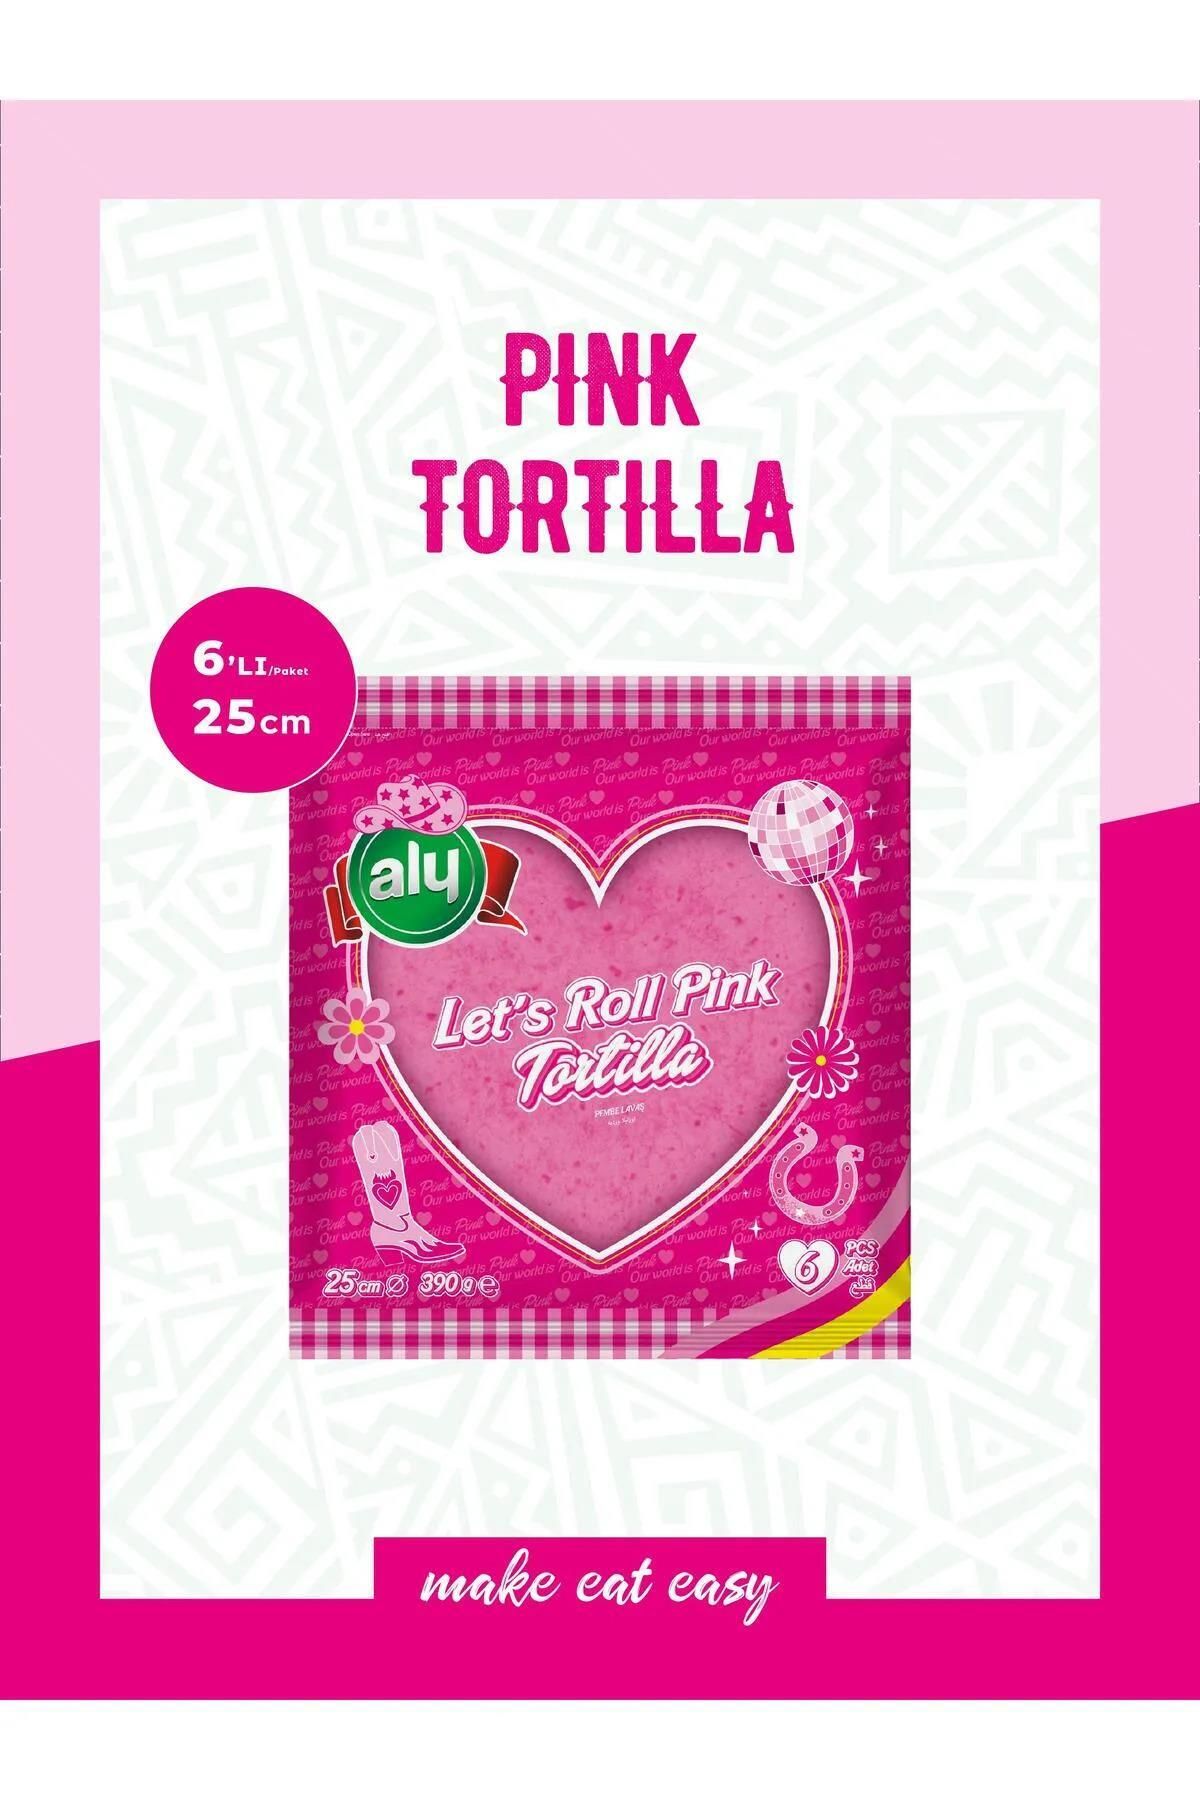 Aly Pink Tortilla Lavaş 25 Cm 6'lı Paket 390g